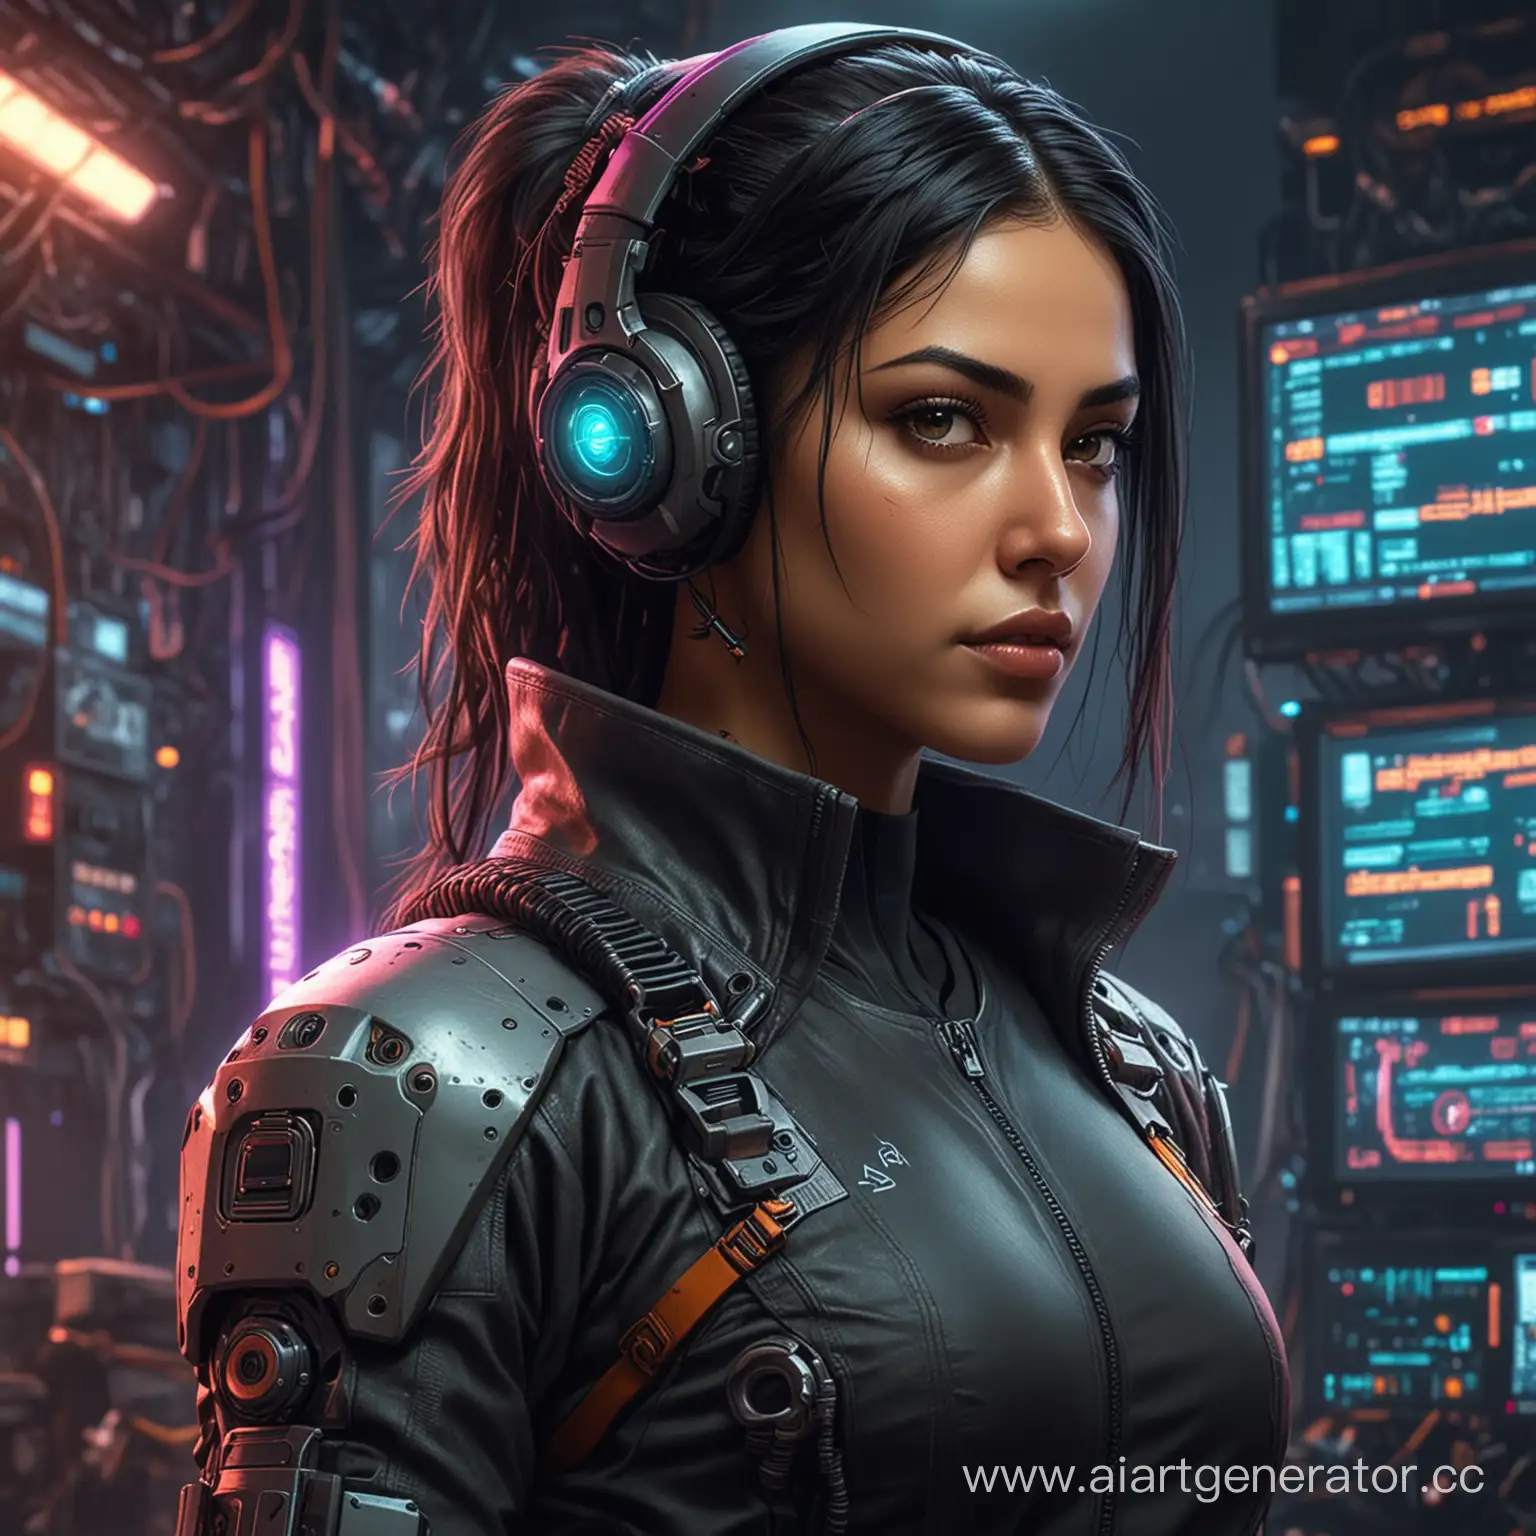 Persian-Cyberpunk-Female-Engineer-in-Futuristic-Cityscape